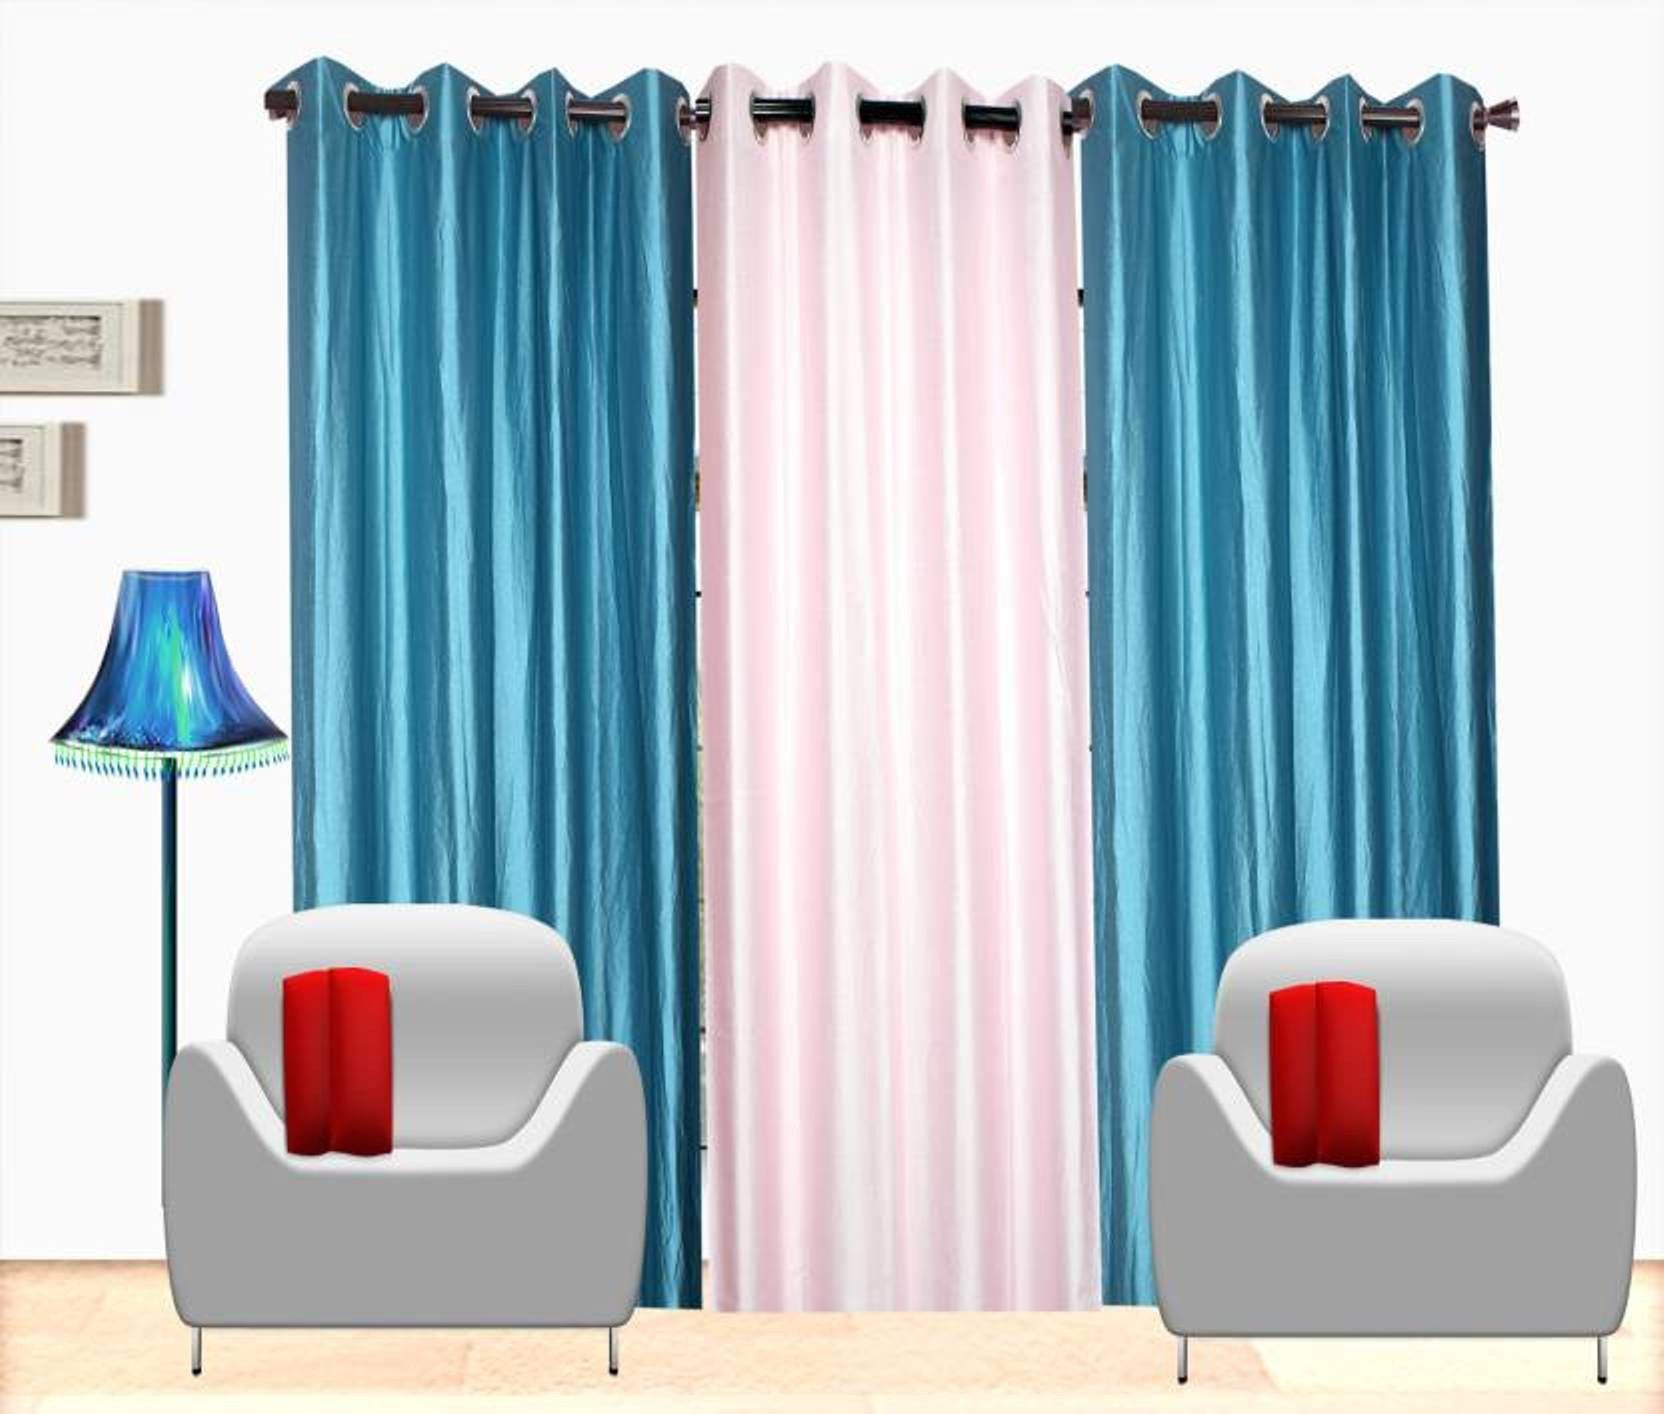     			BELLA TRUE Solid SemiTransparent Eyelet Curtain 9 ft ( Pack of 3 )  Blue